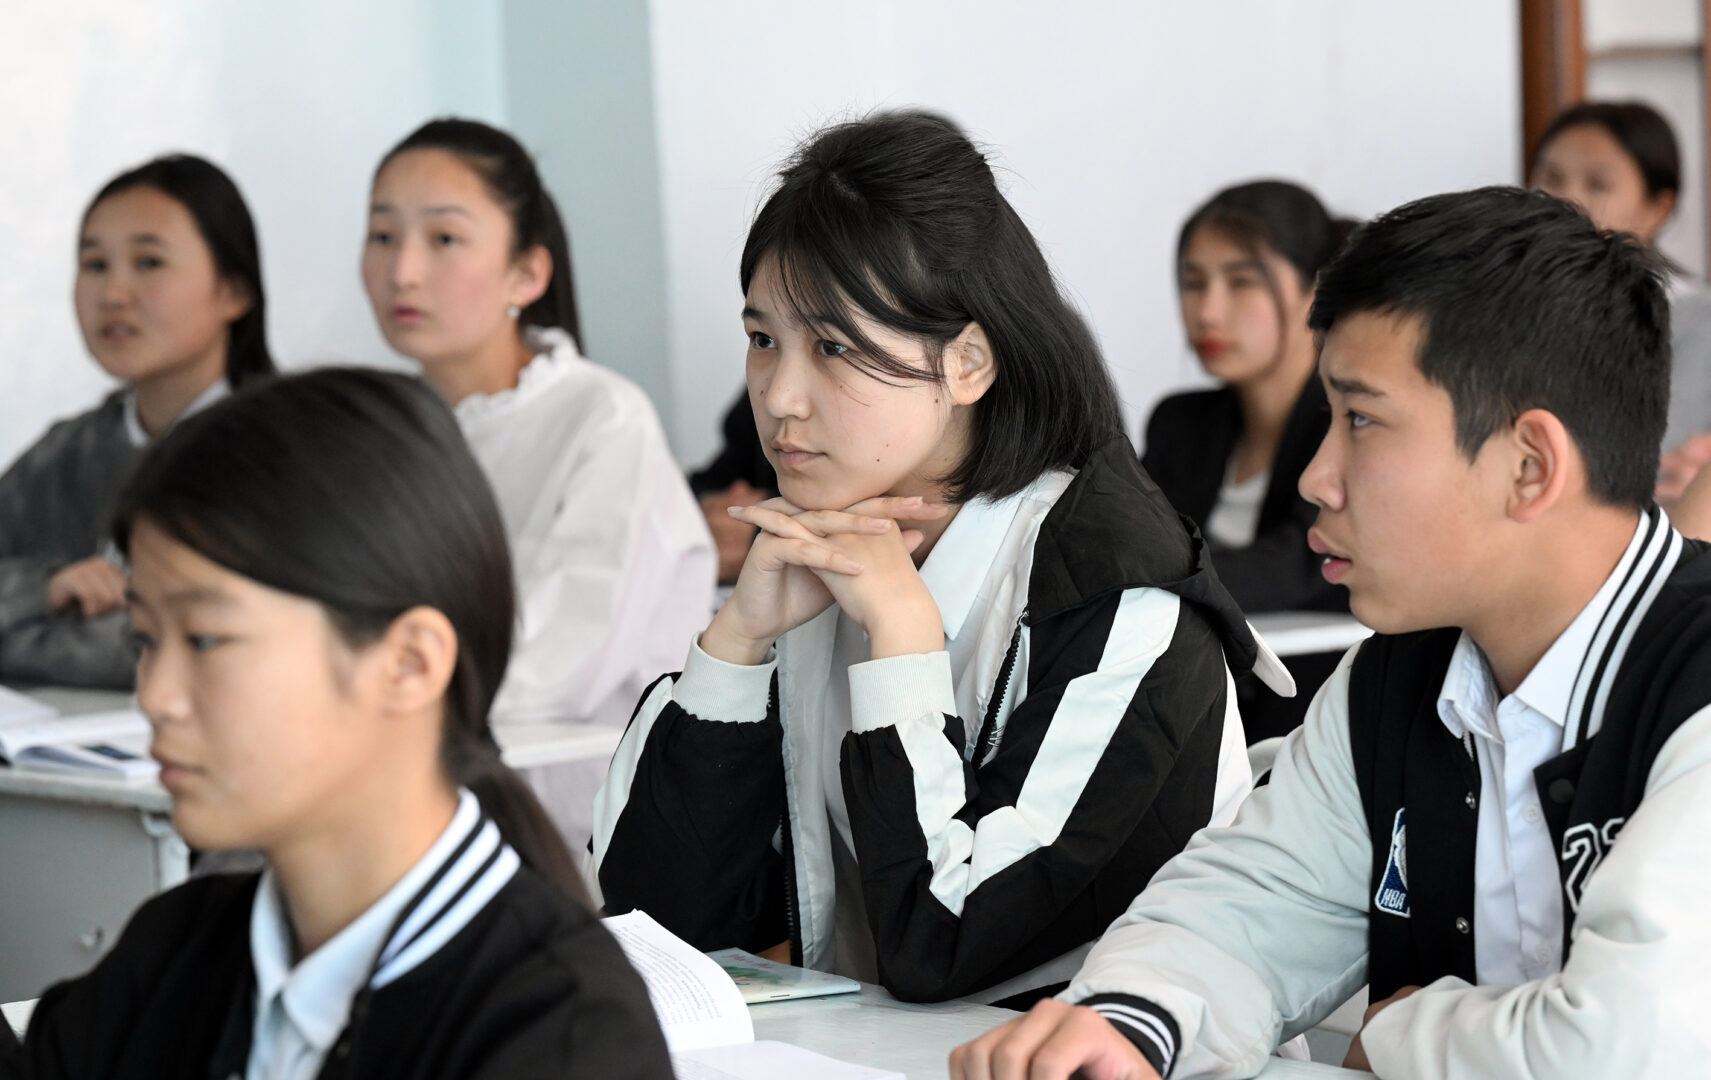 DOS 3786 Президент внепланово посетил одну из школ Бишкека и посидел на уроке - фото